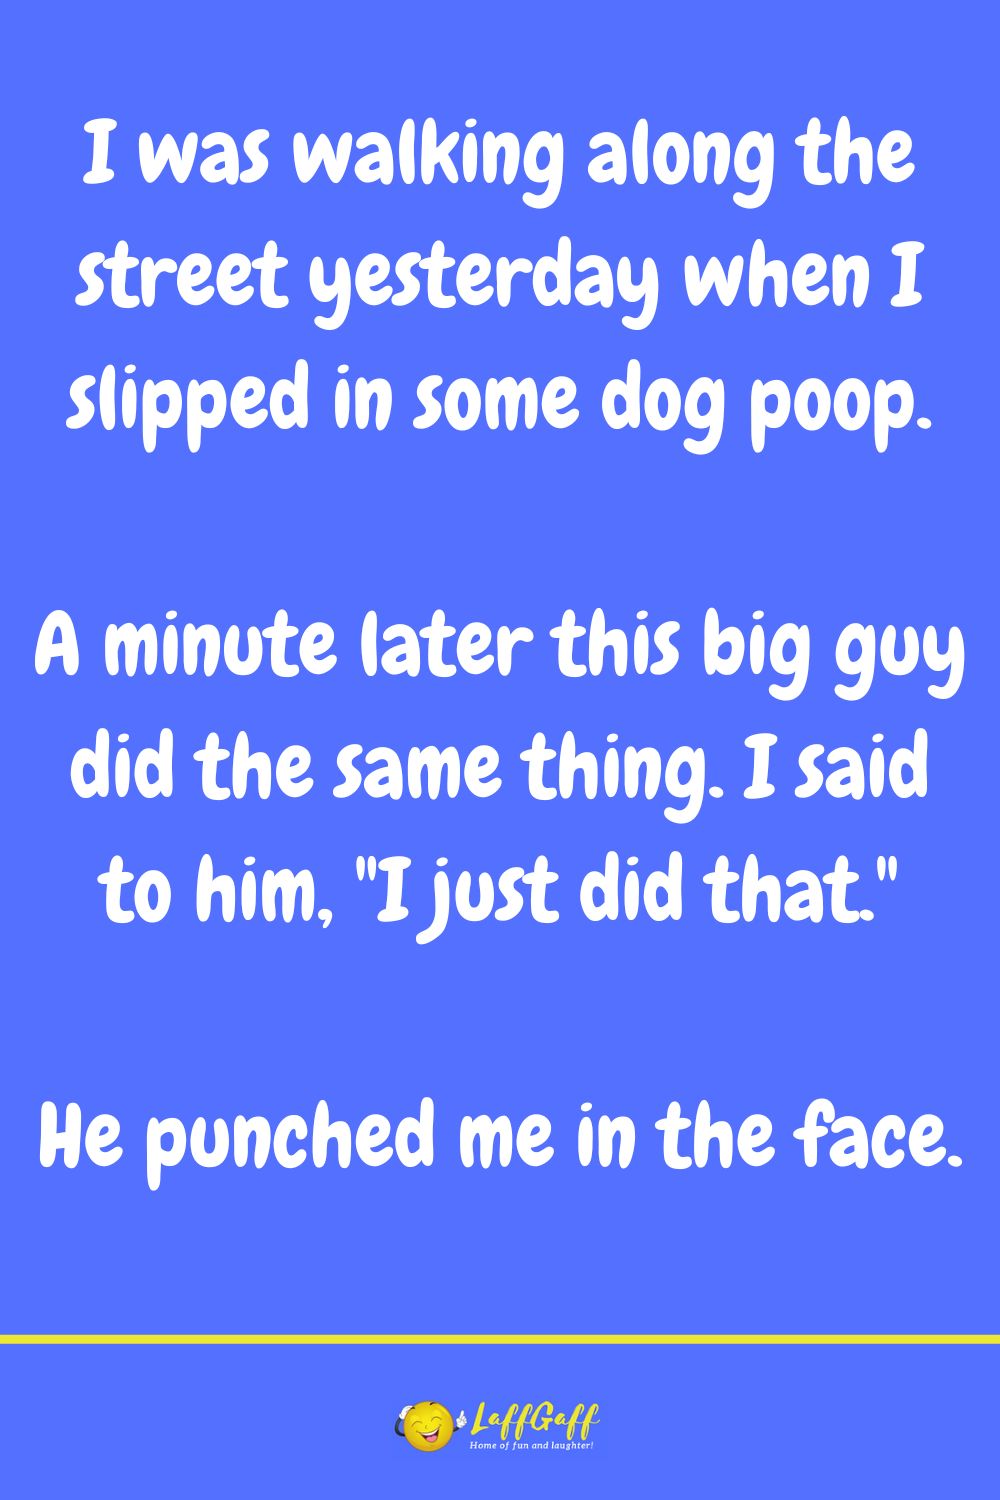 Dog poop joke from LaffGaff.